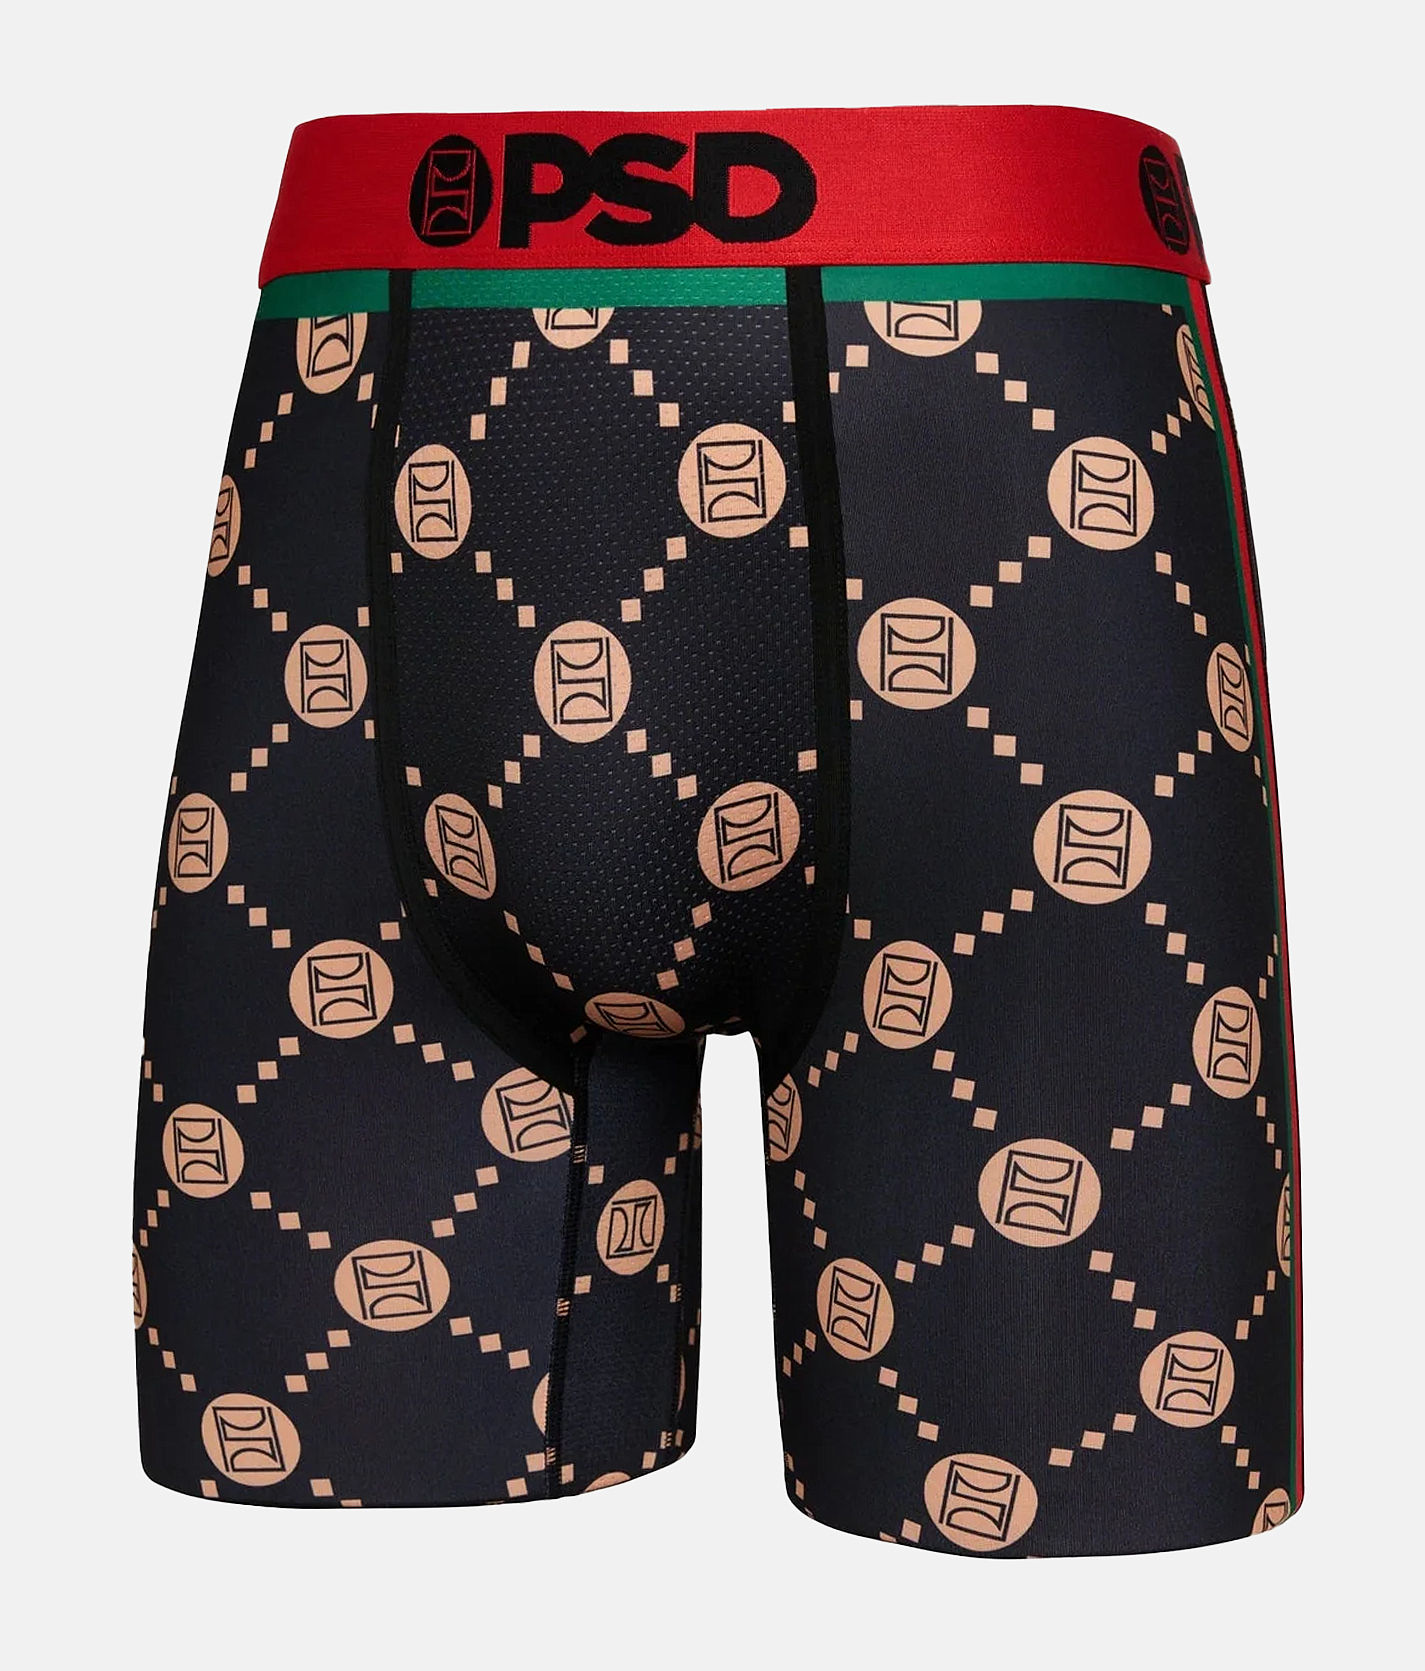 PSD Emblem Luxe Stretch Boxer Briefs - Men's Boxers in Multi